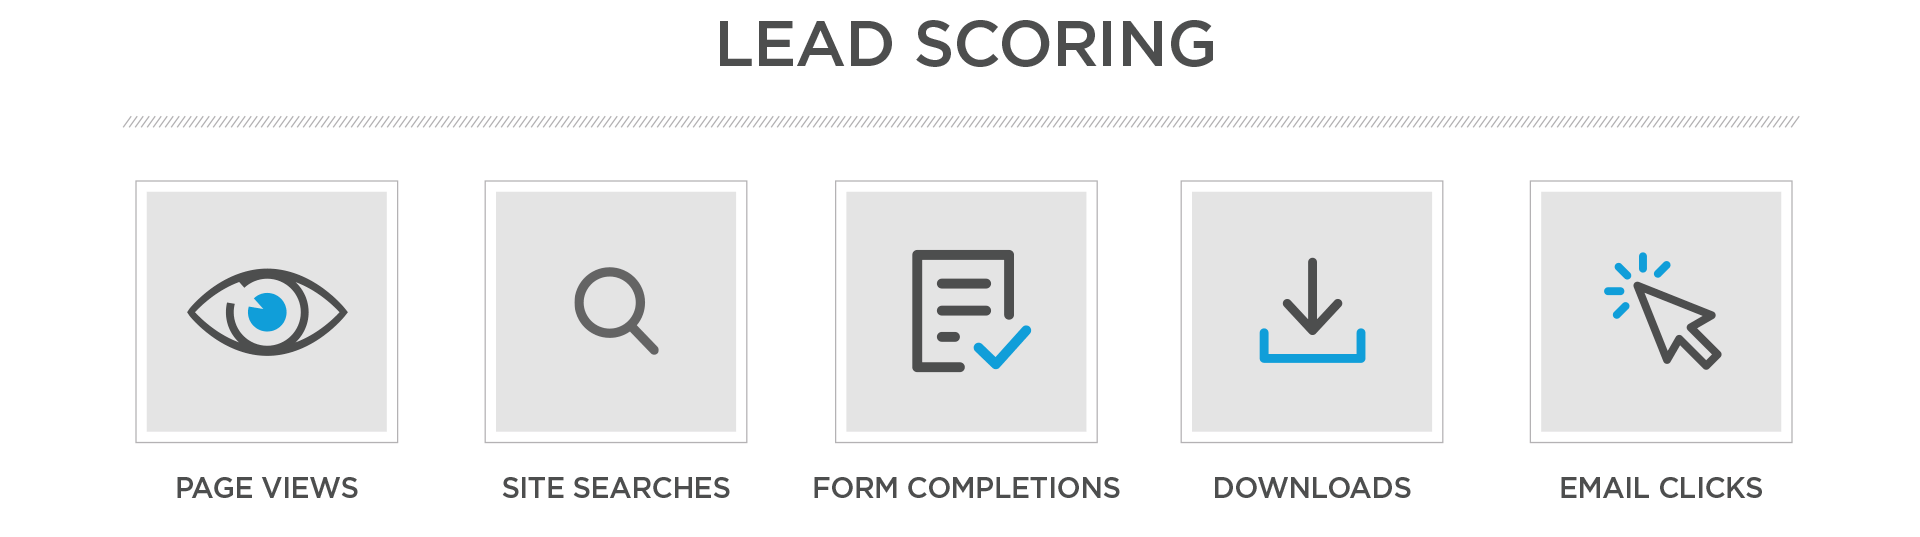 lead-scoring